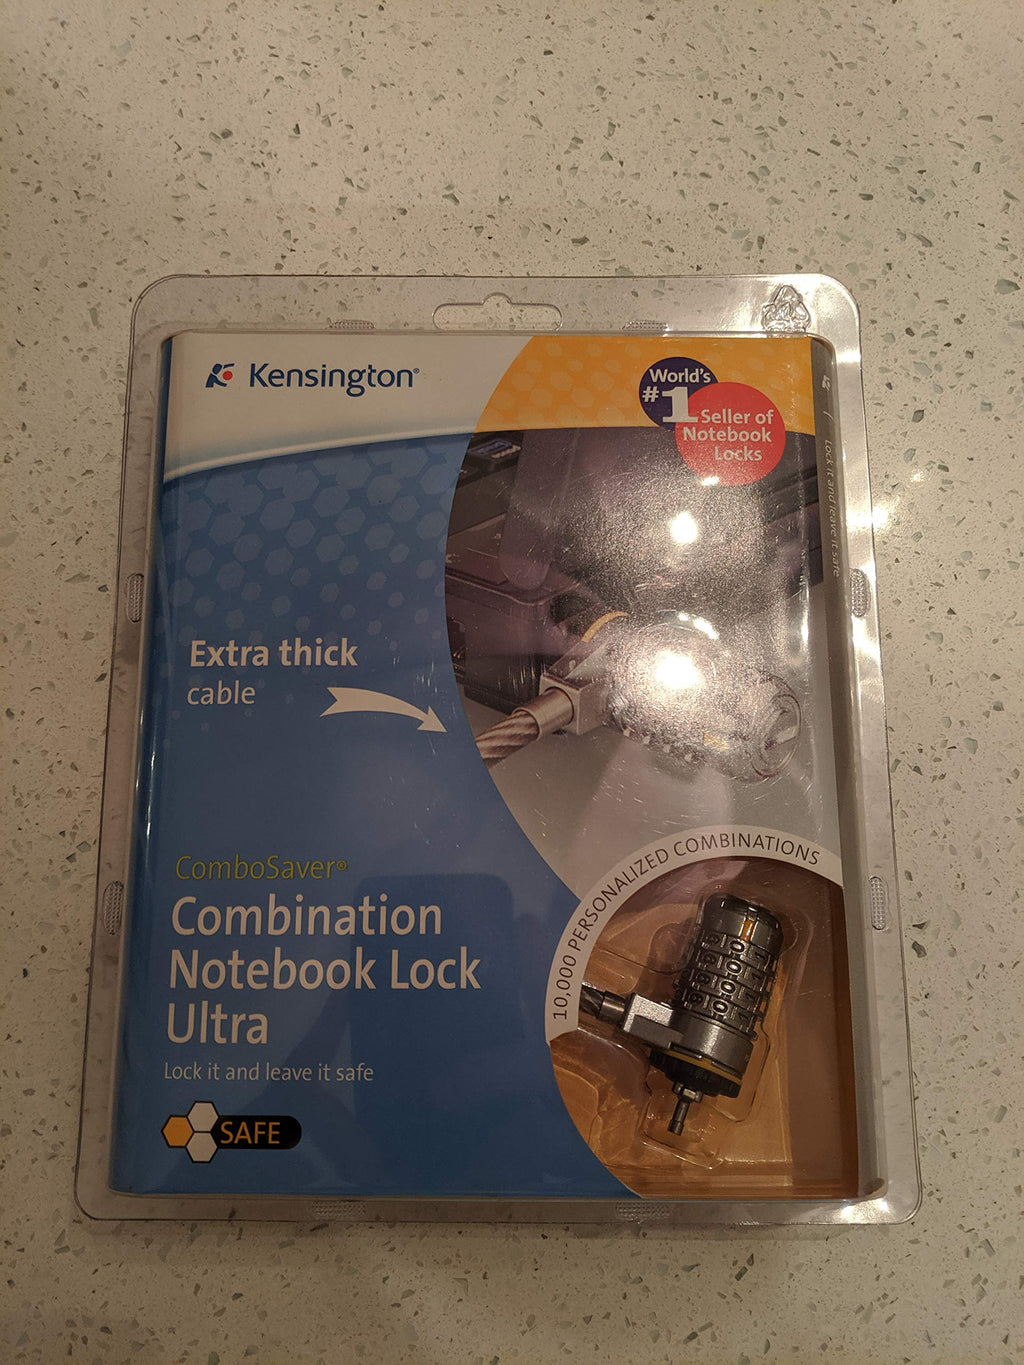  [AUSTRALIA] - Kensington K64516US Combosaver Ultra Combination Notebook Lock